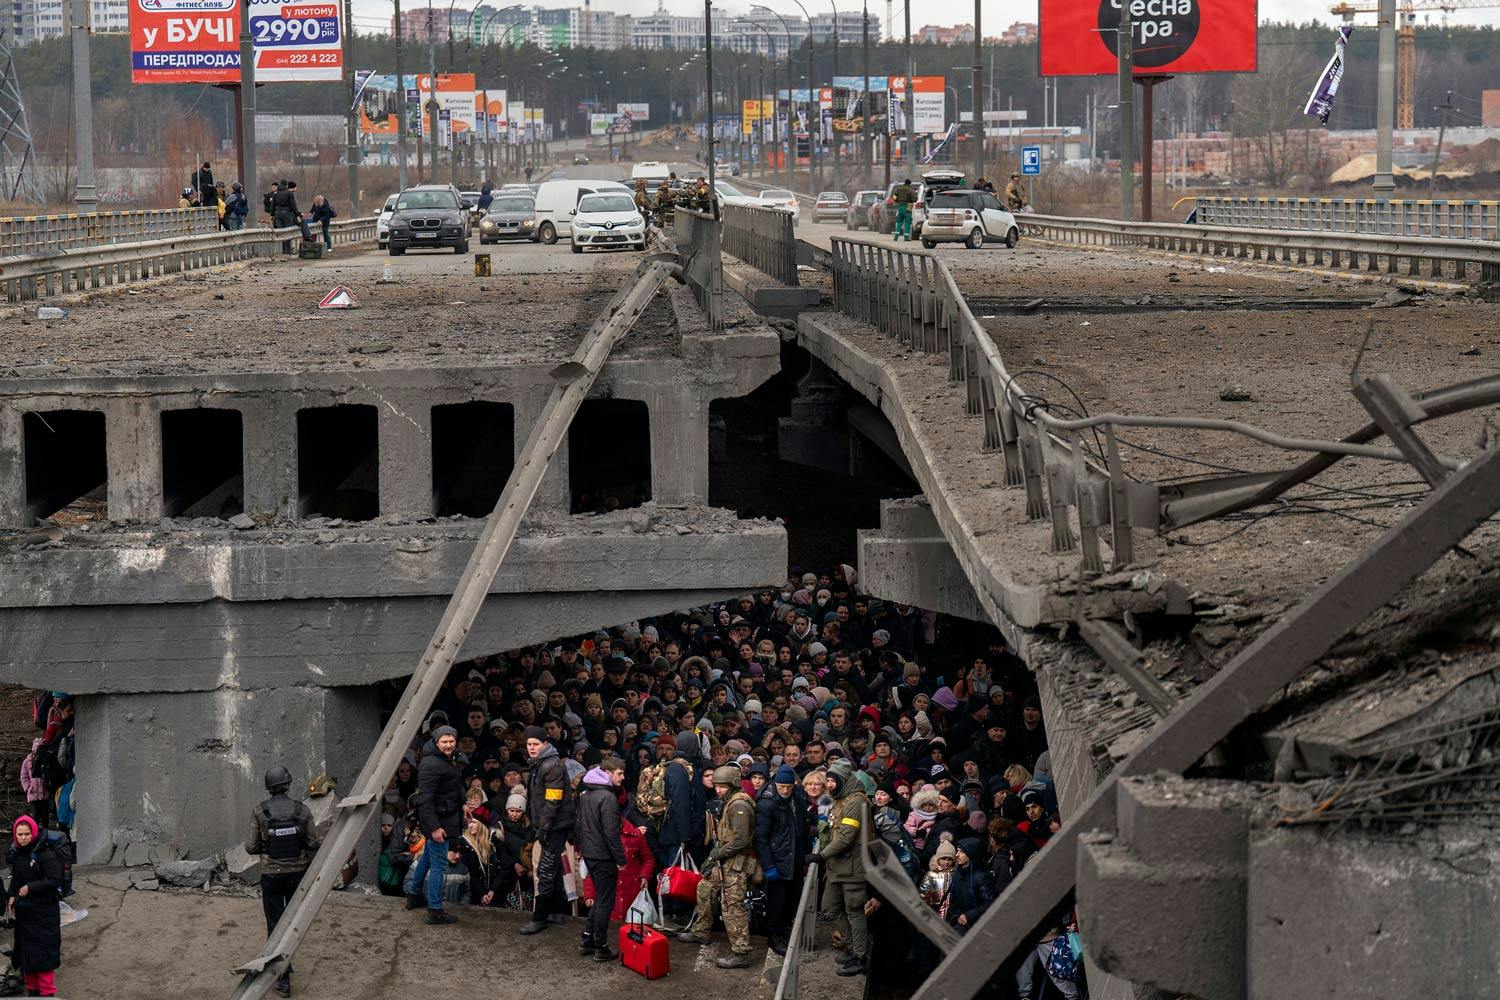 A crowd of Ukrainians take shelter under a damaged concrete bridge during the Russo-Ukrainian War.